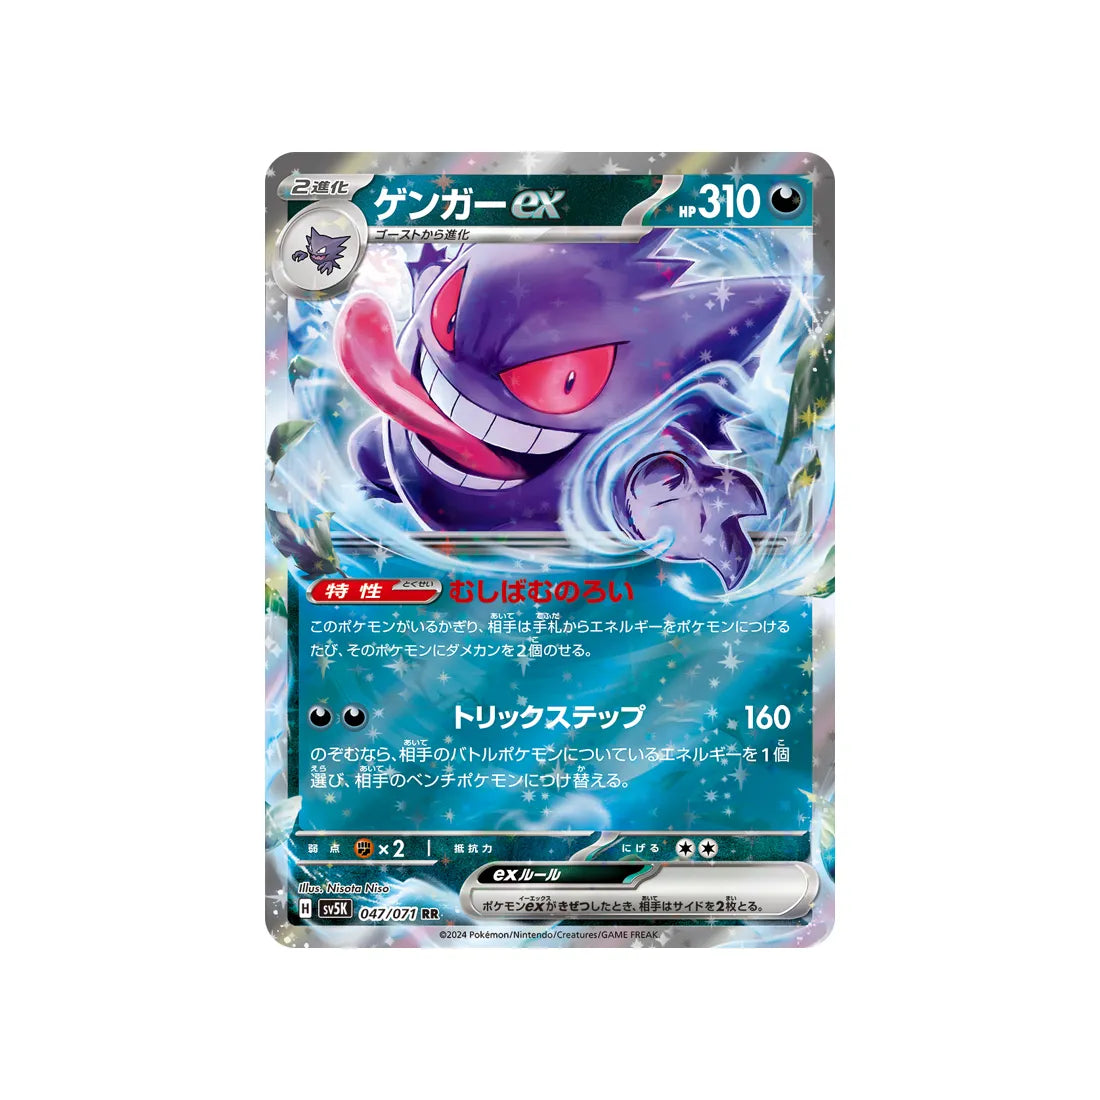 Pokémon card Wild Force SV5K 047/071: Gengar EX 